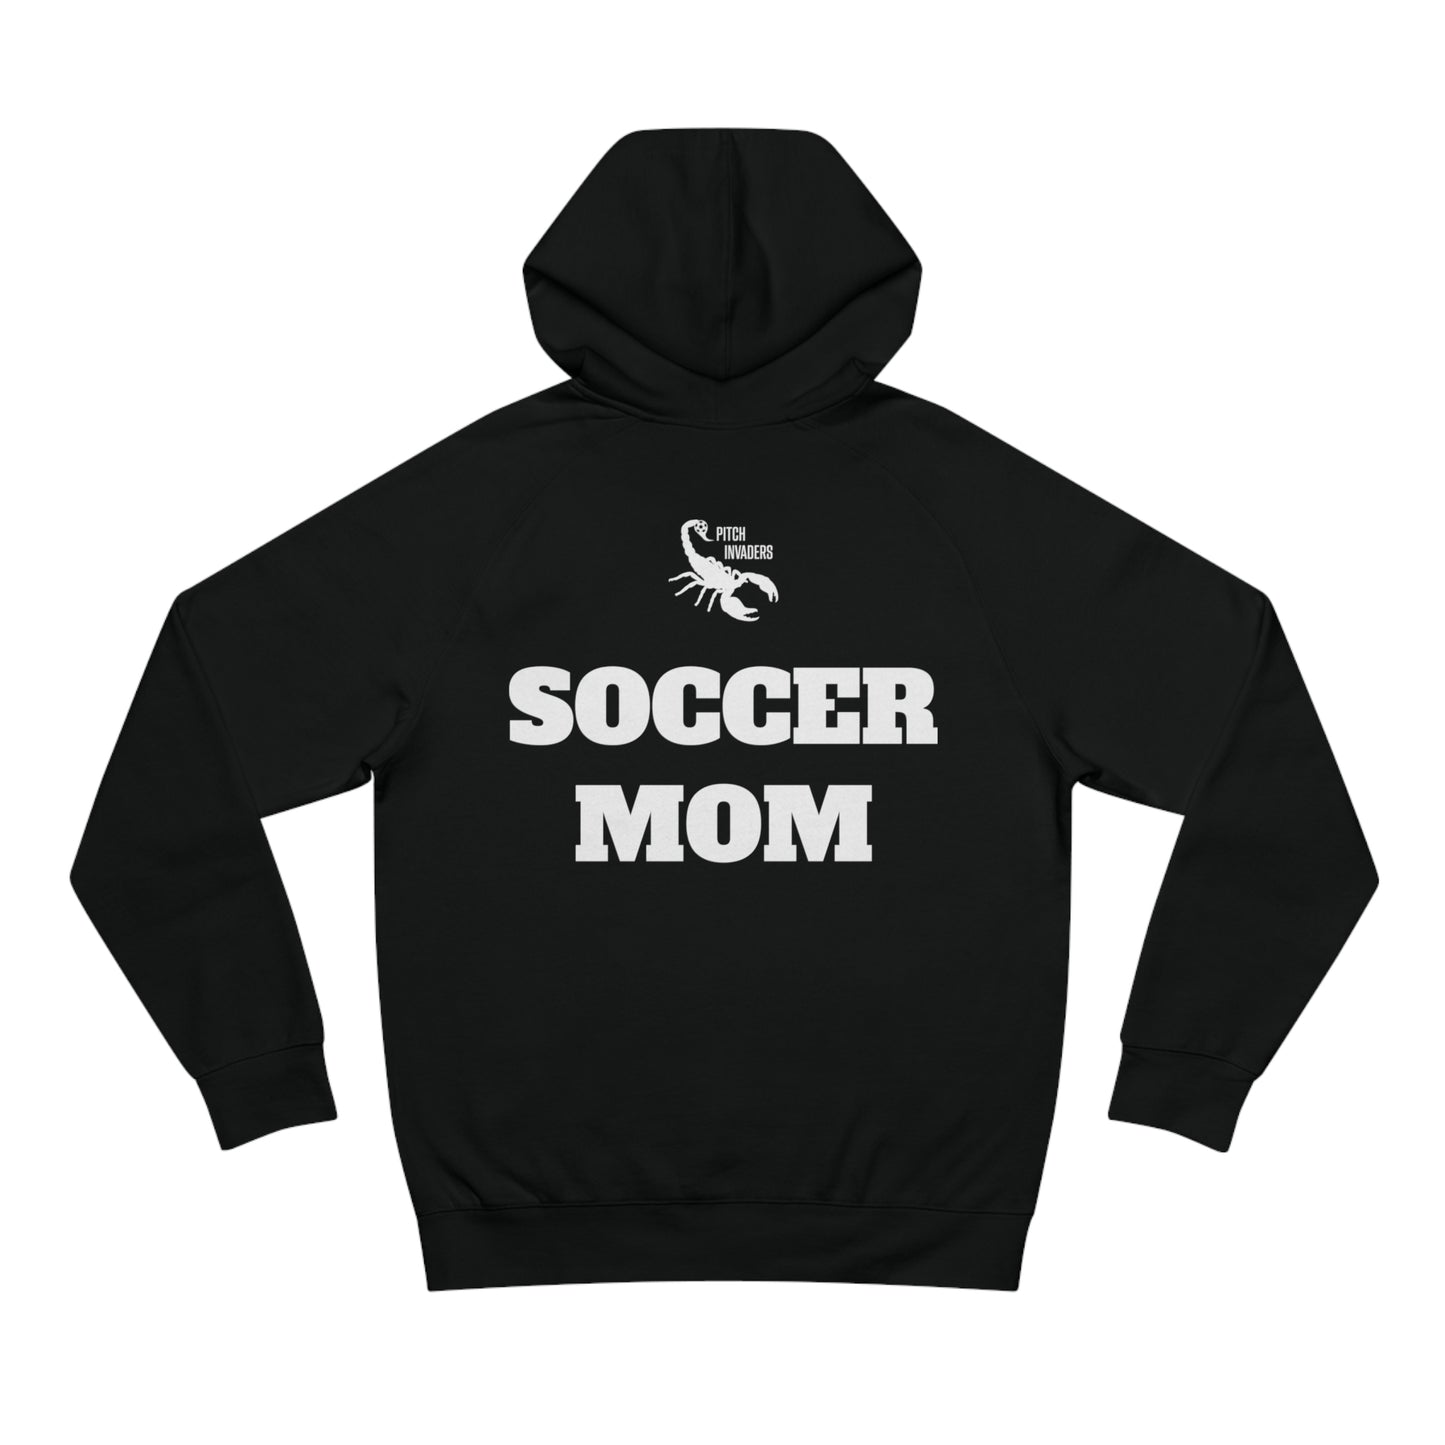 Soccer Parent Lifestyle SOCCER MOM Hoodie (Unisex)